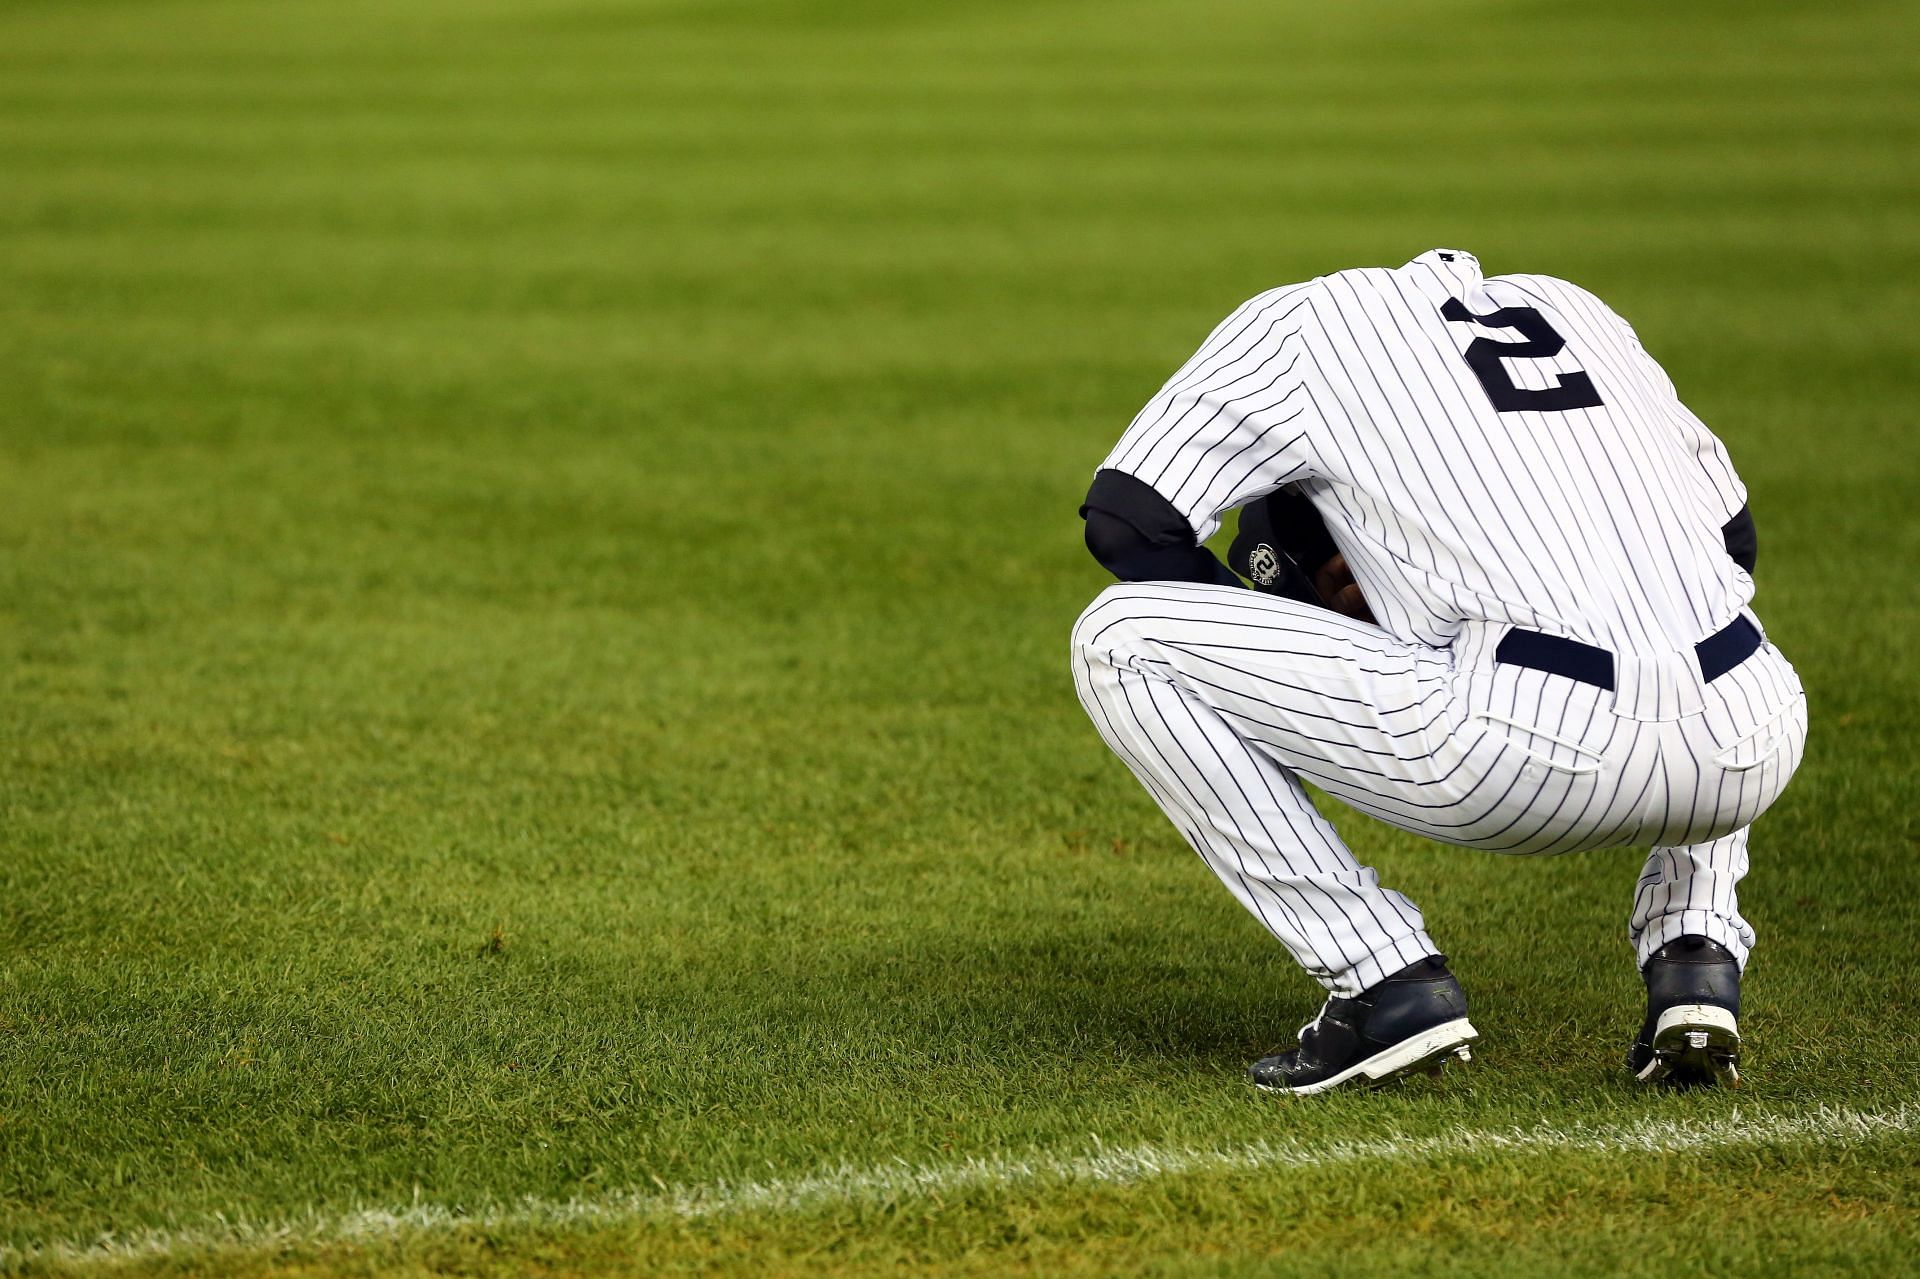 Baltimore Orioles vs. New York Yankees via Getty Images)